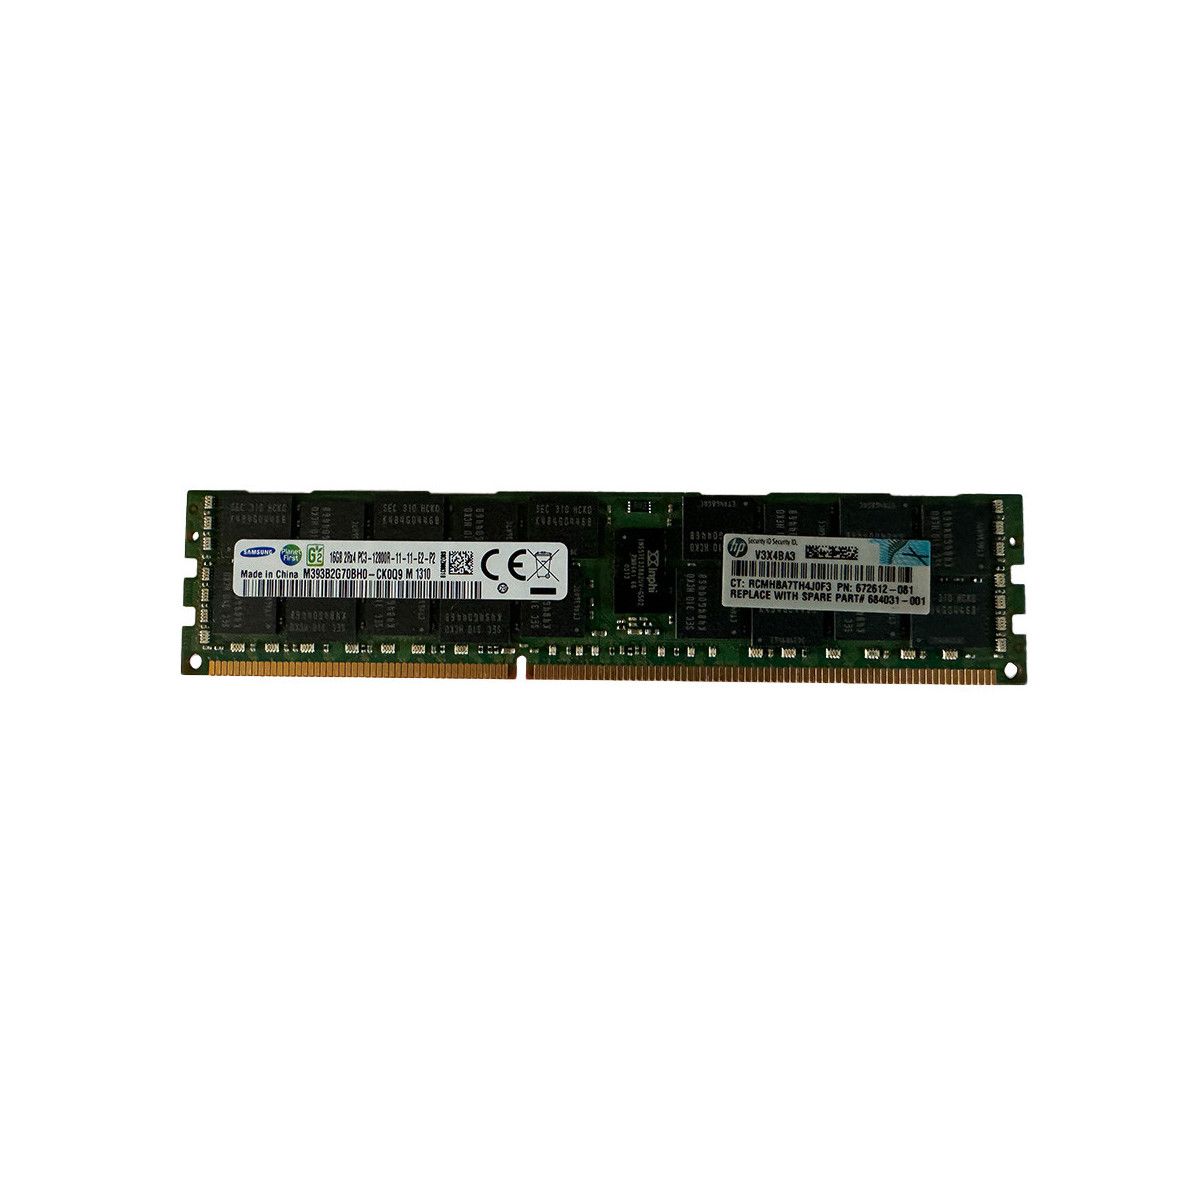 672633-B21-MS - Memstar 1x 16GB DDR3-1600 RDIMM PC3-12800R - Memorie OEM compatibilă Mem-Star 1 - Memstar 